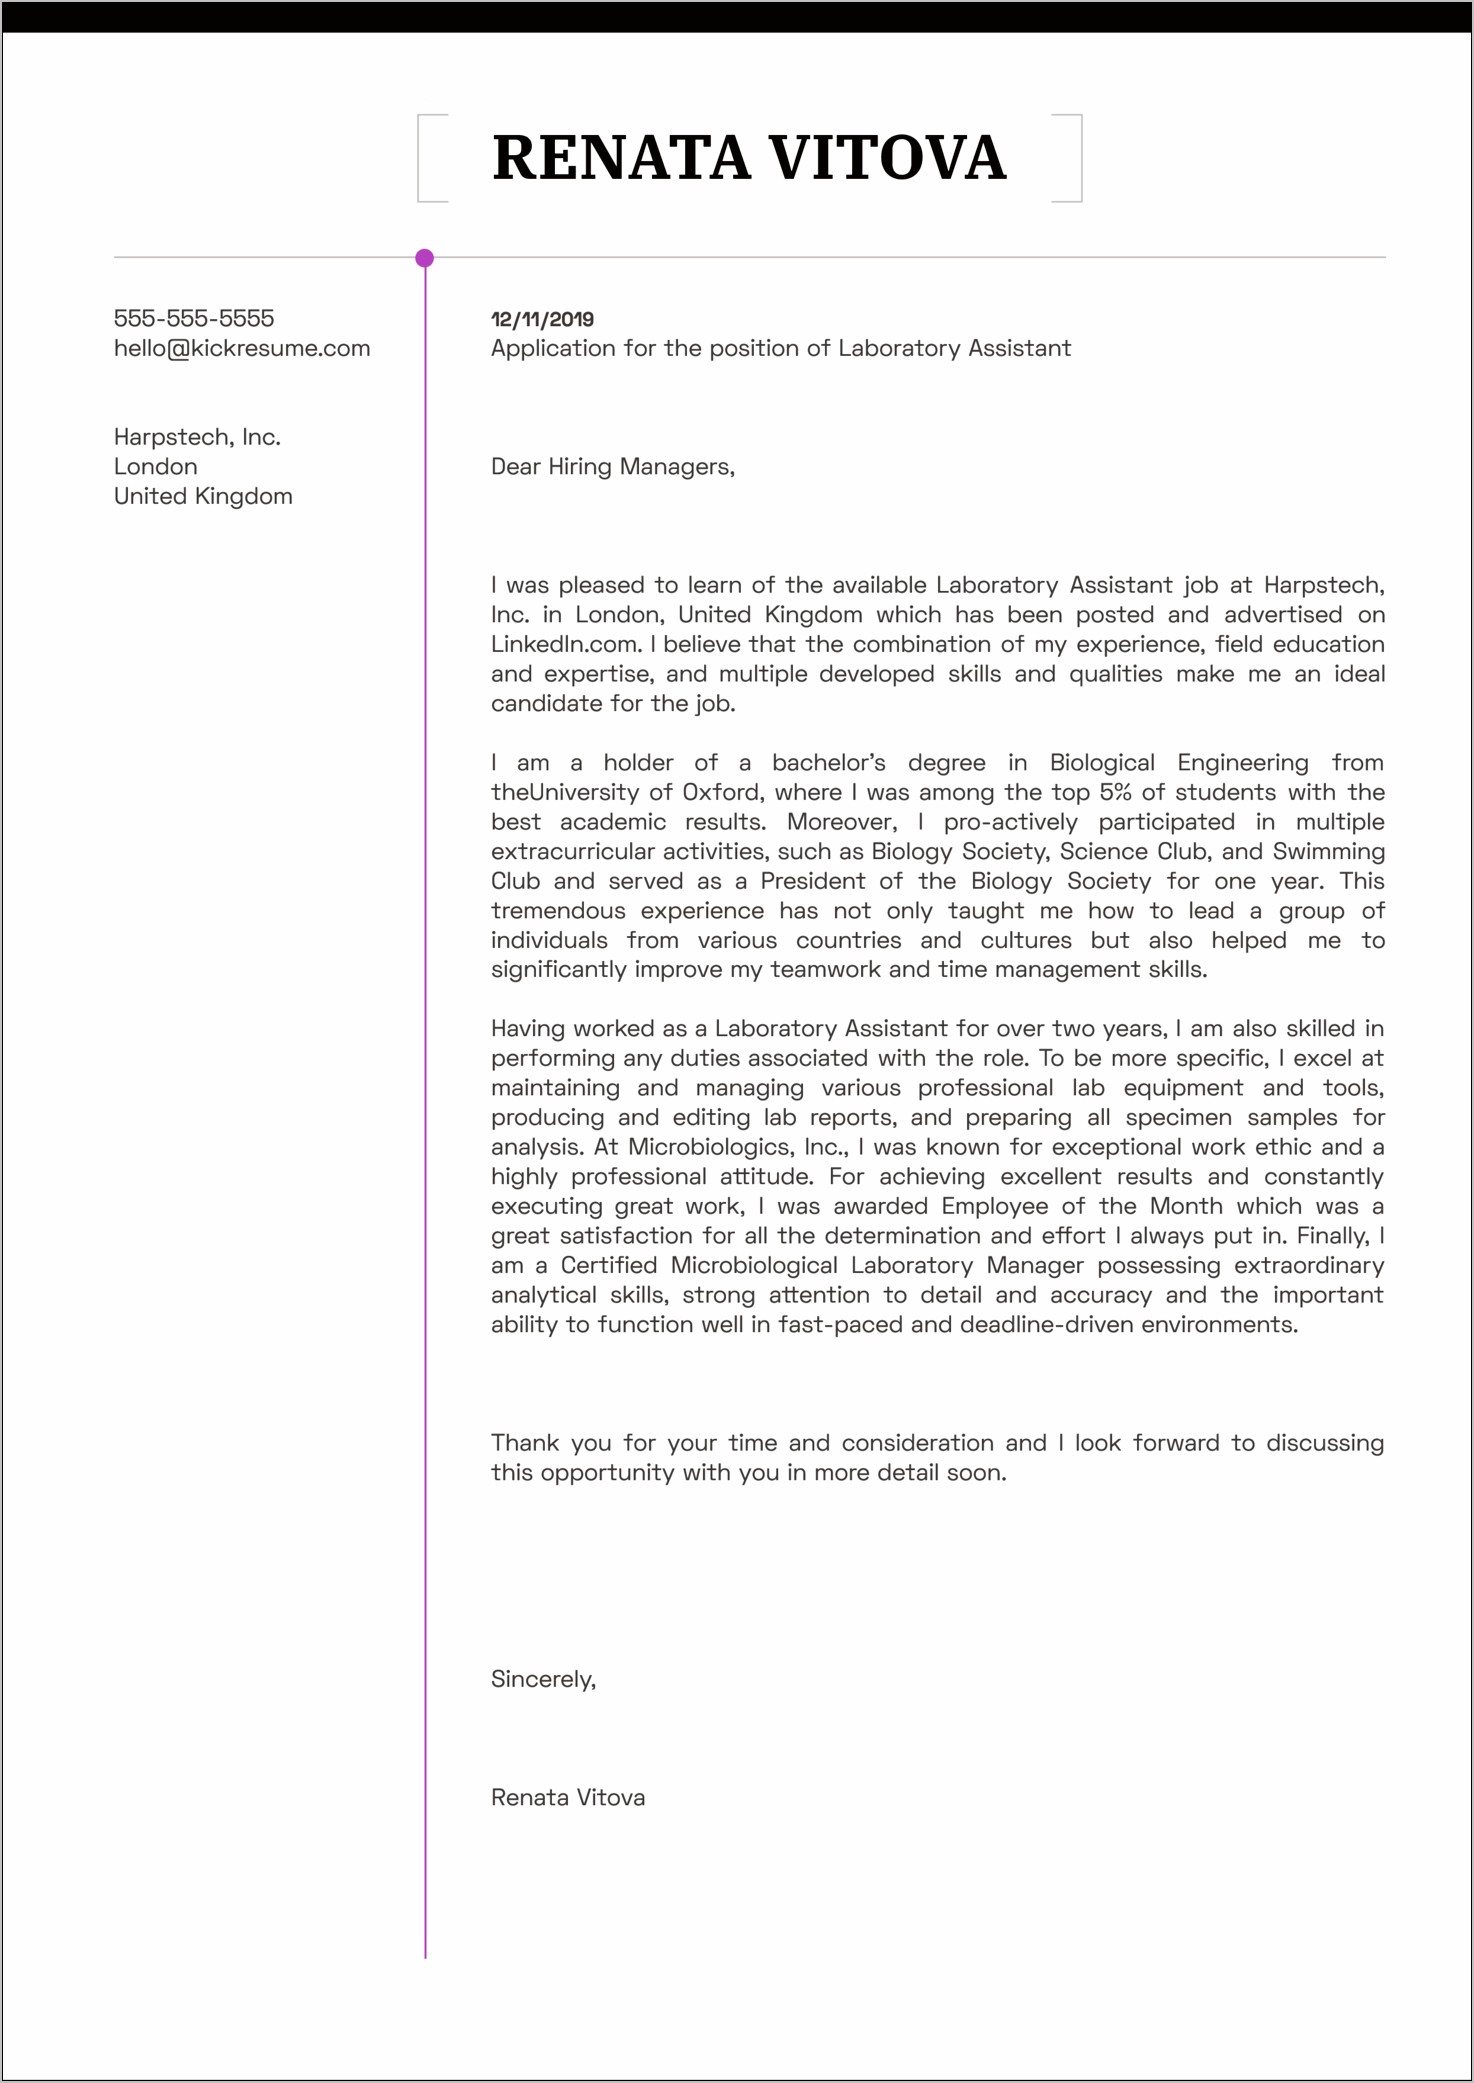 Medical Laboratory Director Resume Cover Letter